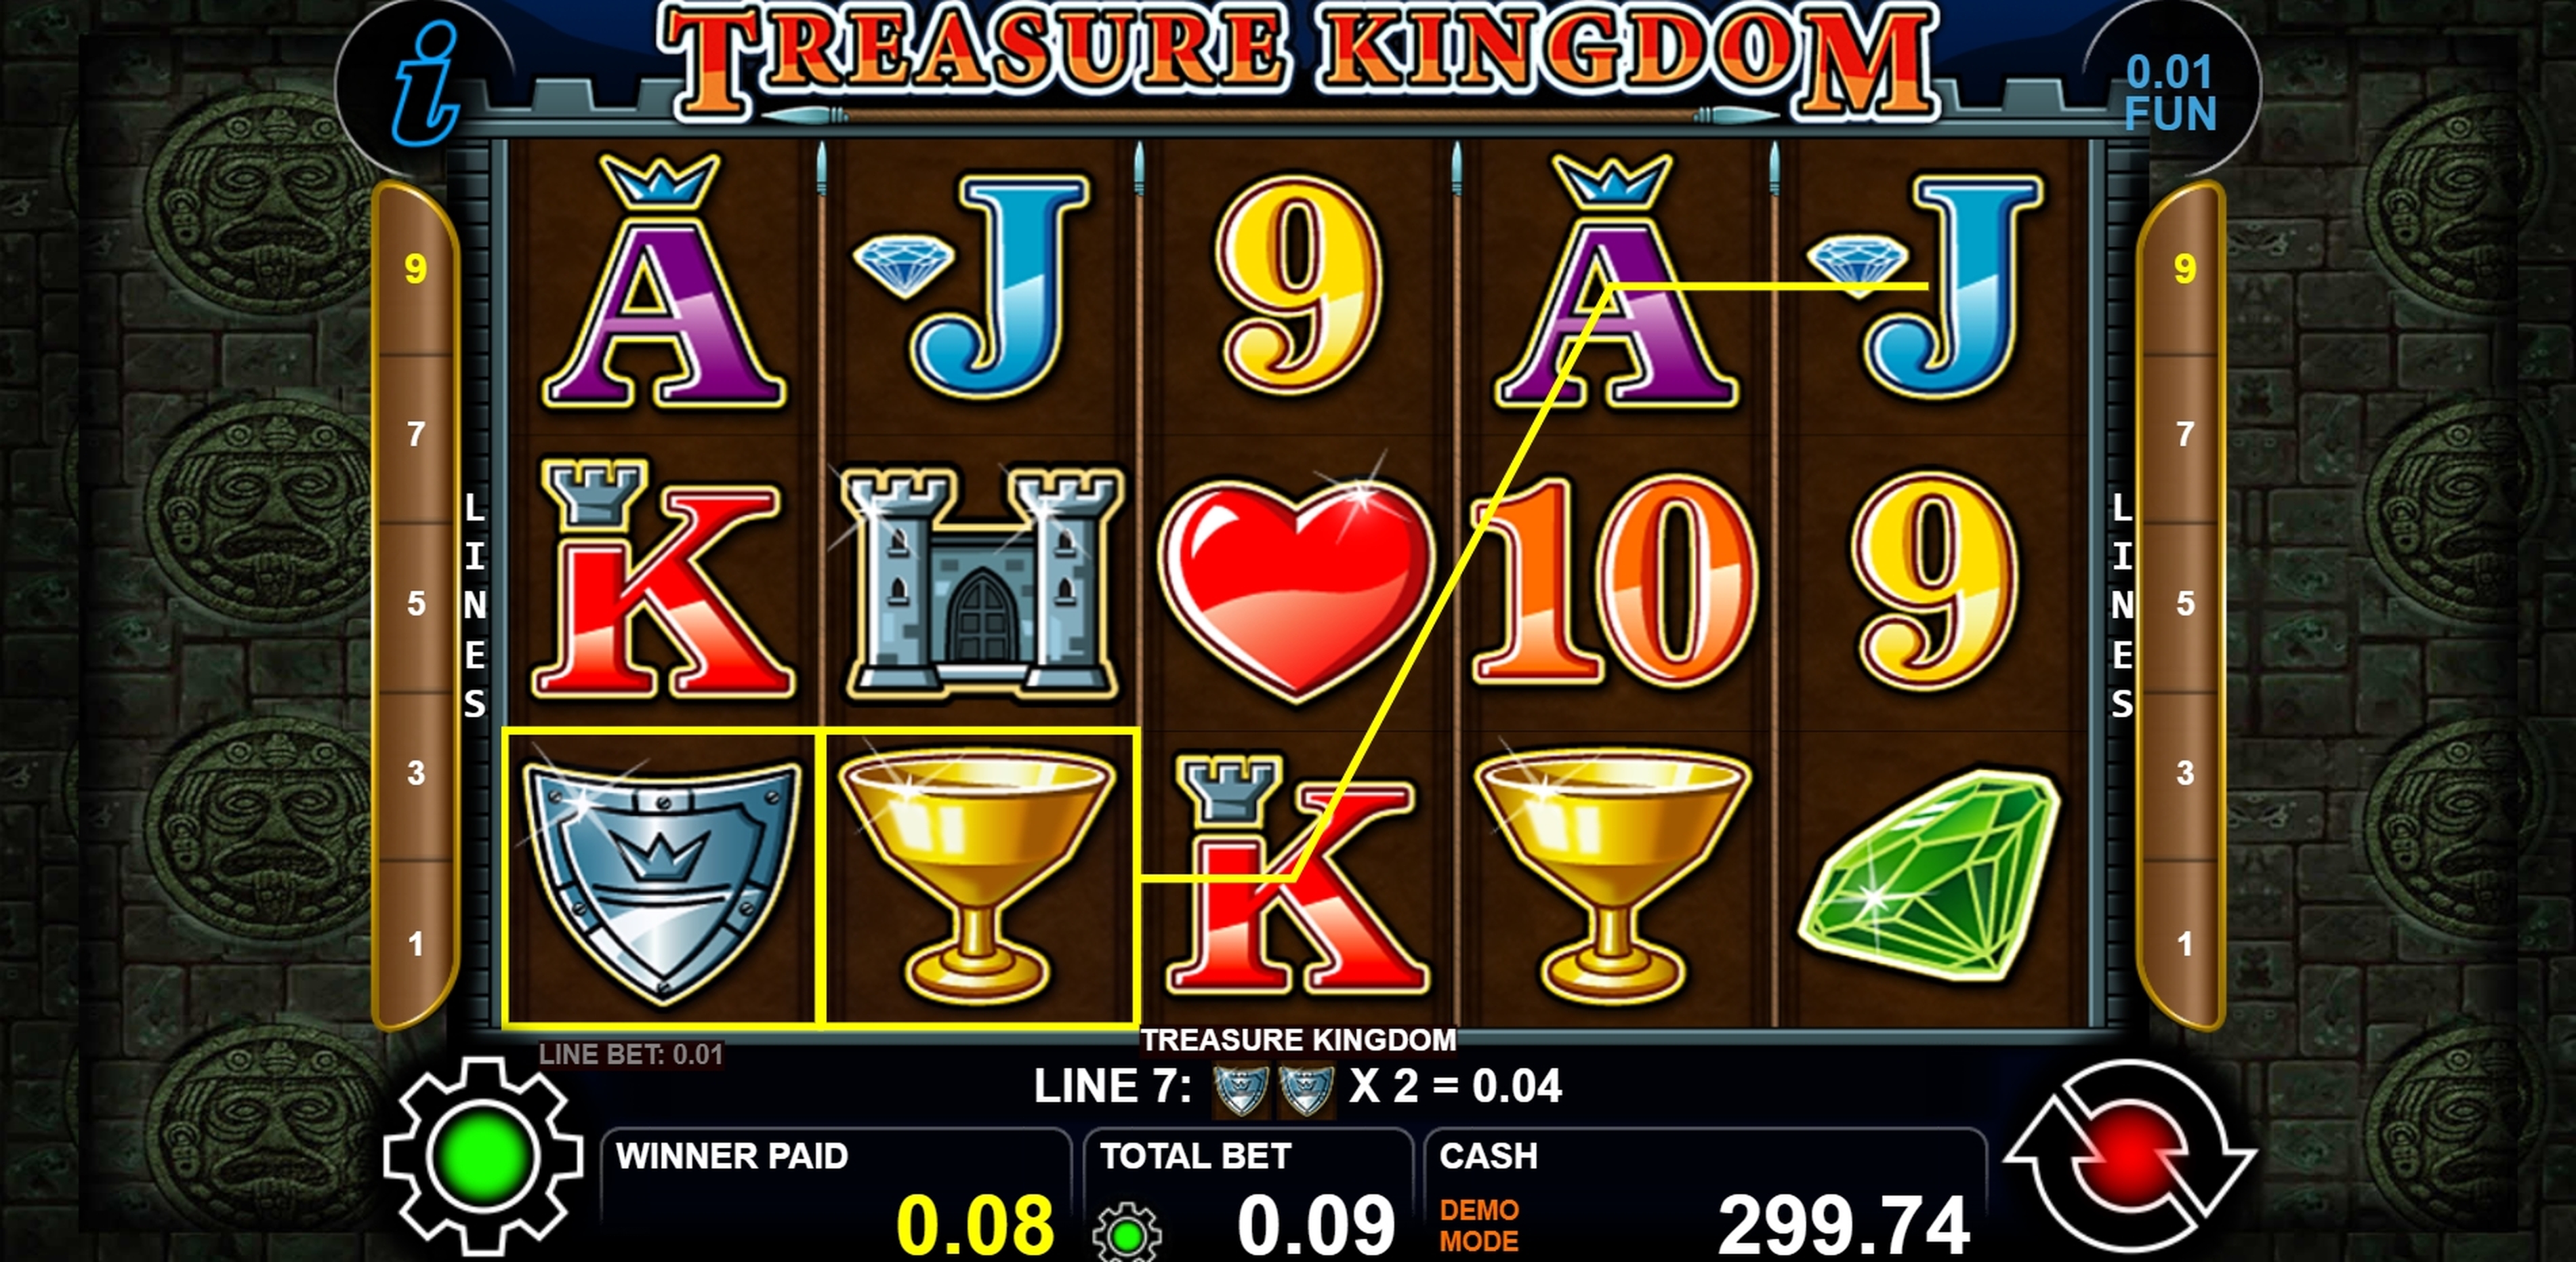 Win Money in Treasure Kingdom Free Slot Game by casino technology